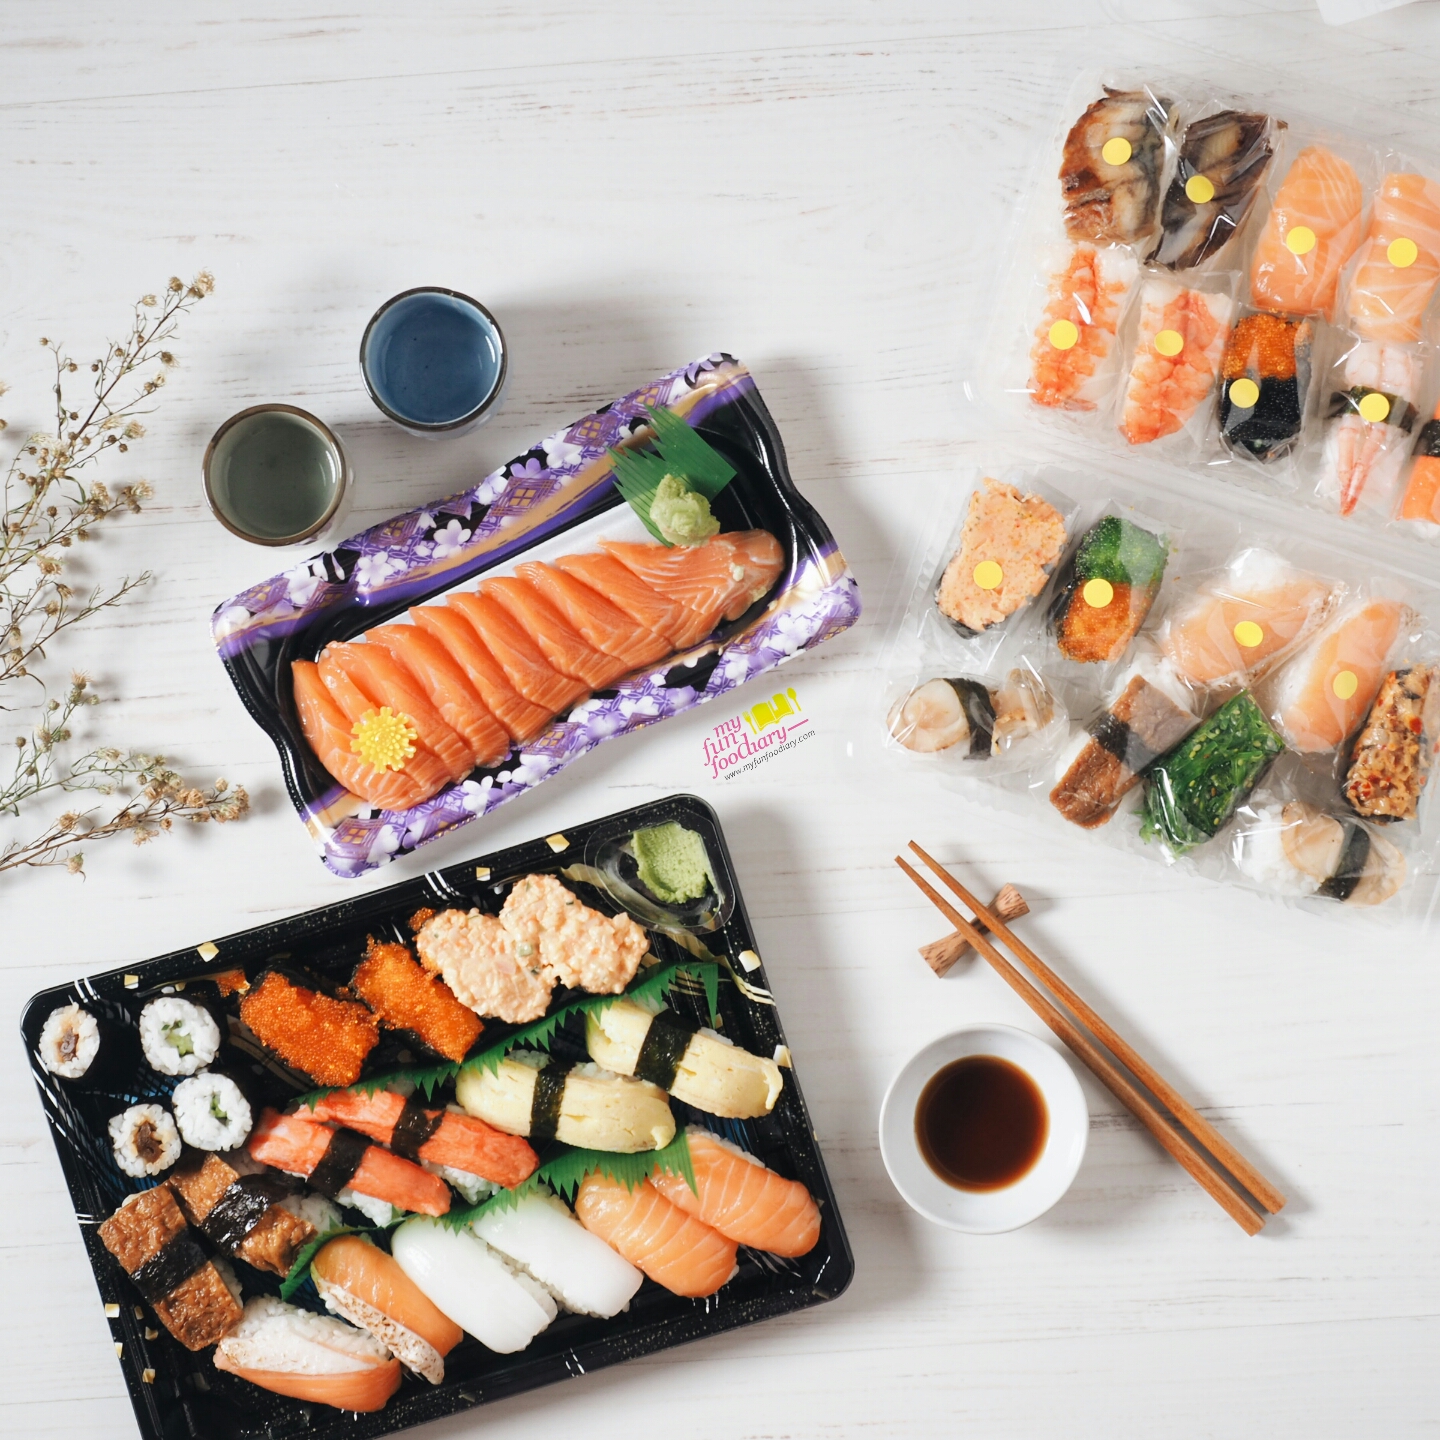 Cheap Sushi and Sashimi at AEON Market BSD City by Myfunfoodiary